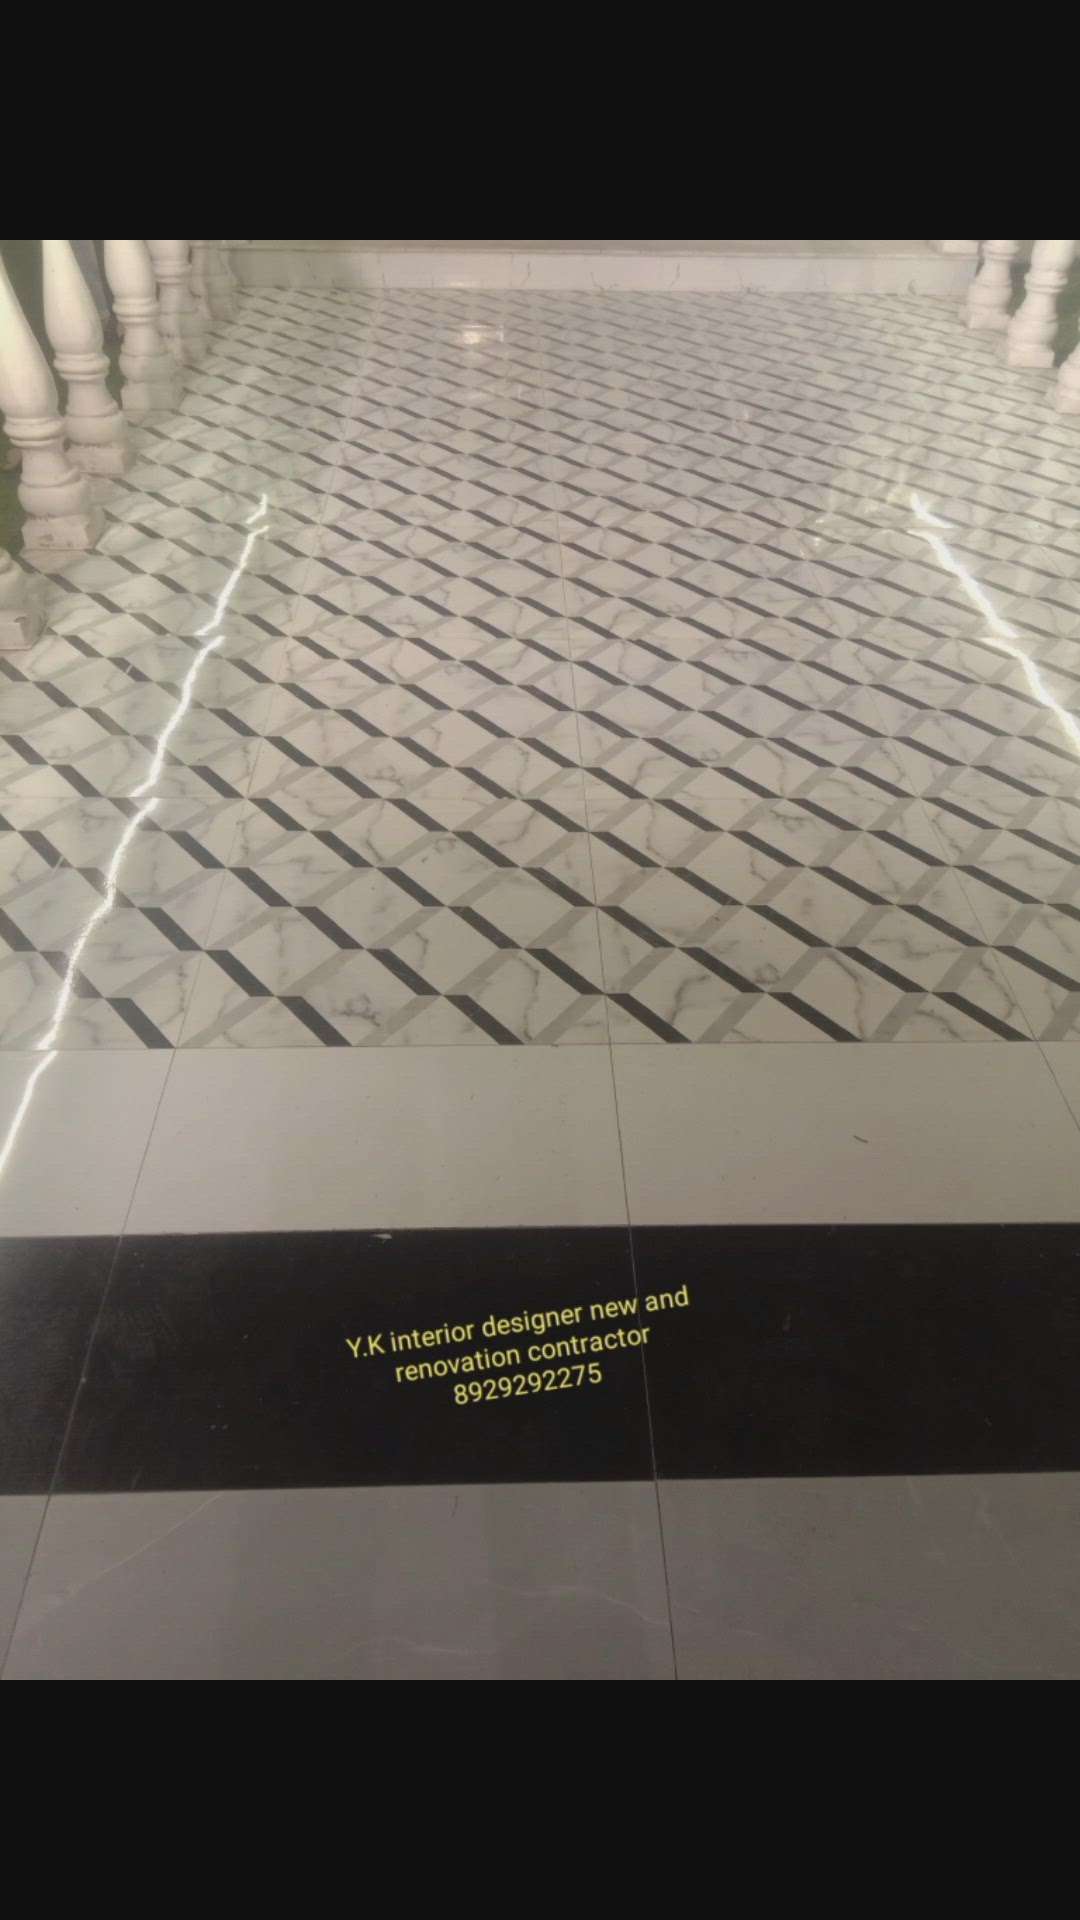 flooring tile,s work 
Y.K interior designer new and renovation contractor  #FlooringTiles  #GraniteFloors  #FlooringSolutions  #bathroomtilesidea  #ykbestintetior  #ykconstrution  #ykmastinterior